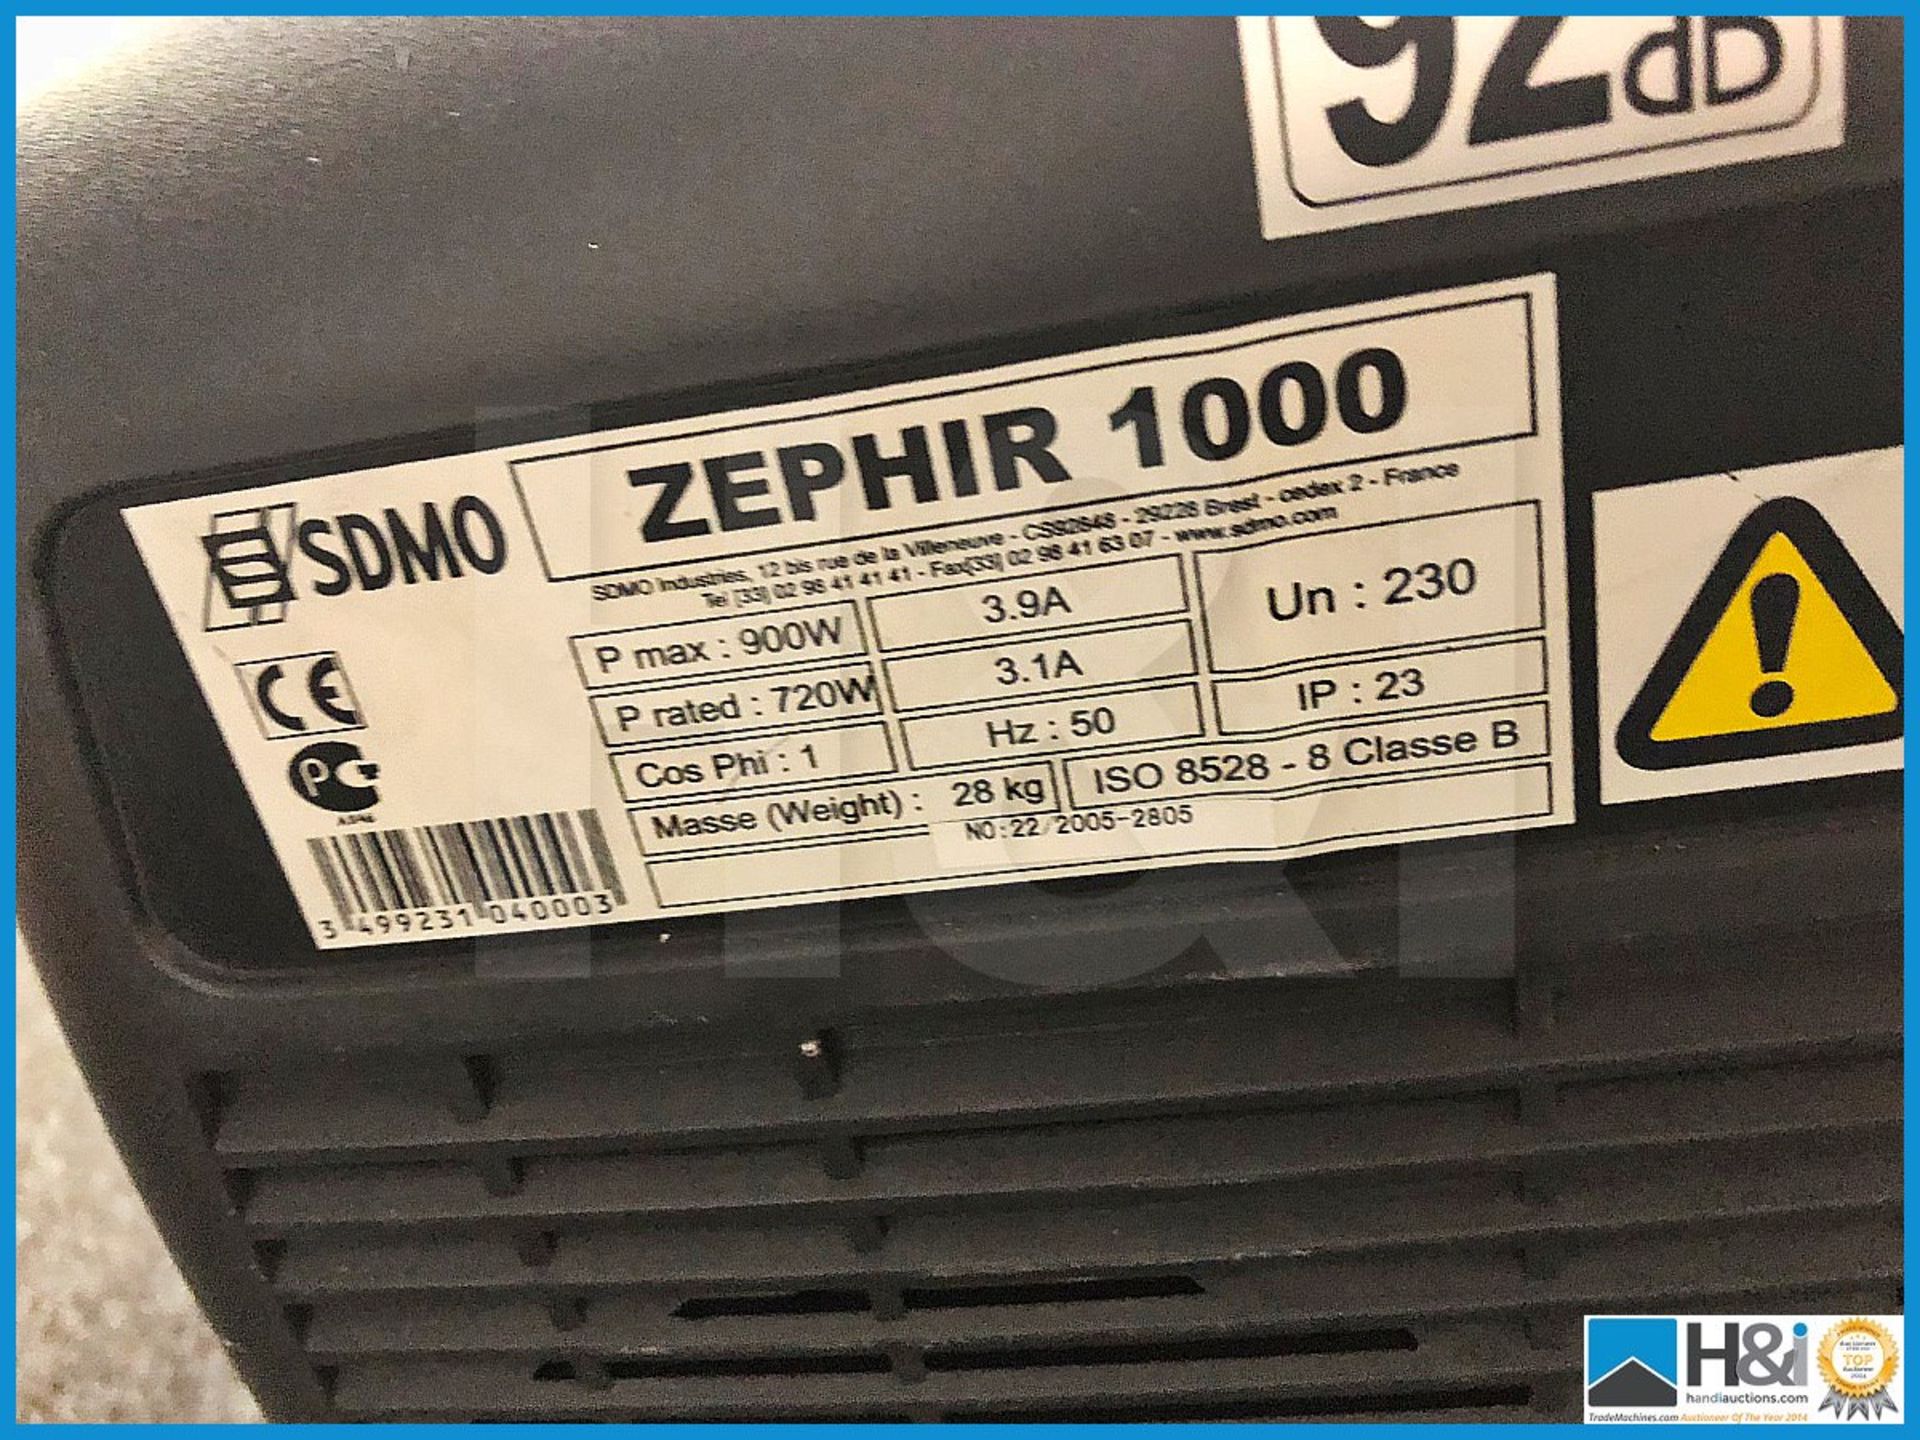 SDMO Zephir 1000 4 stroke engine generator. Advised has fuel tank missing. - Image 5 of 5